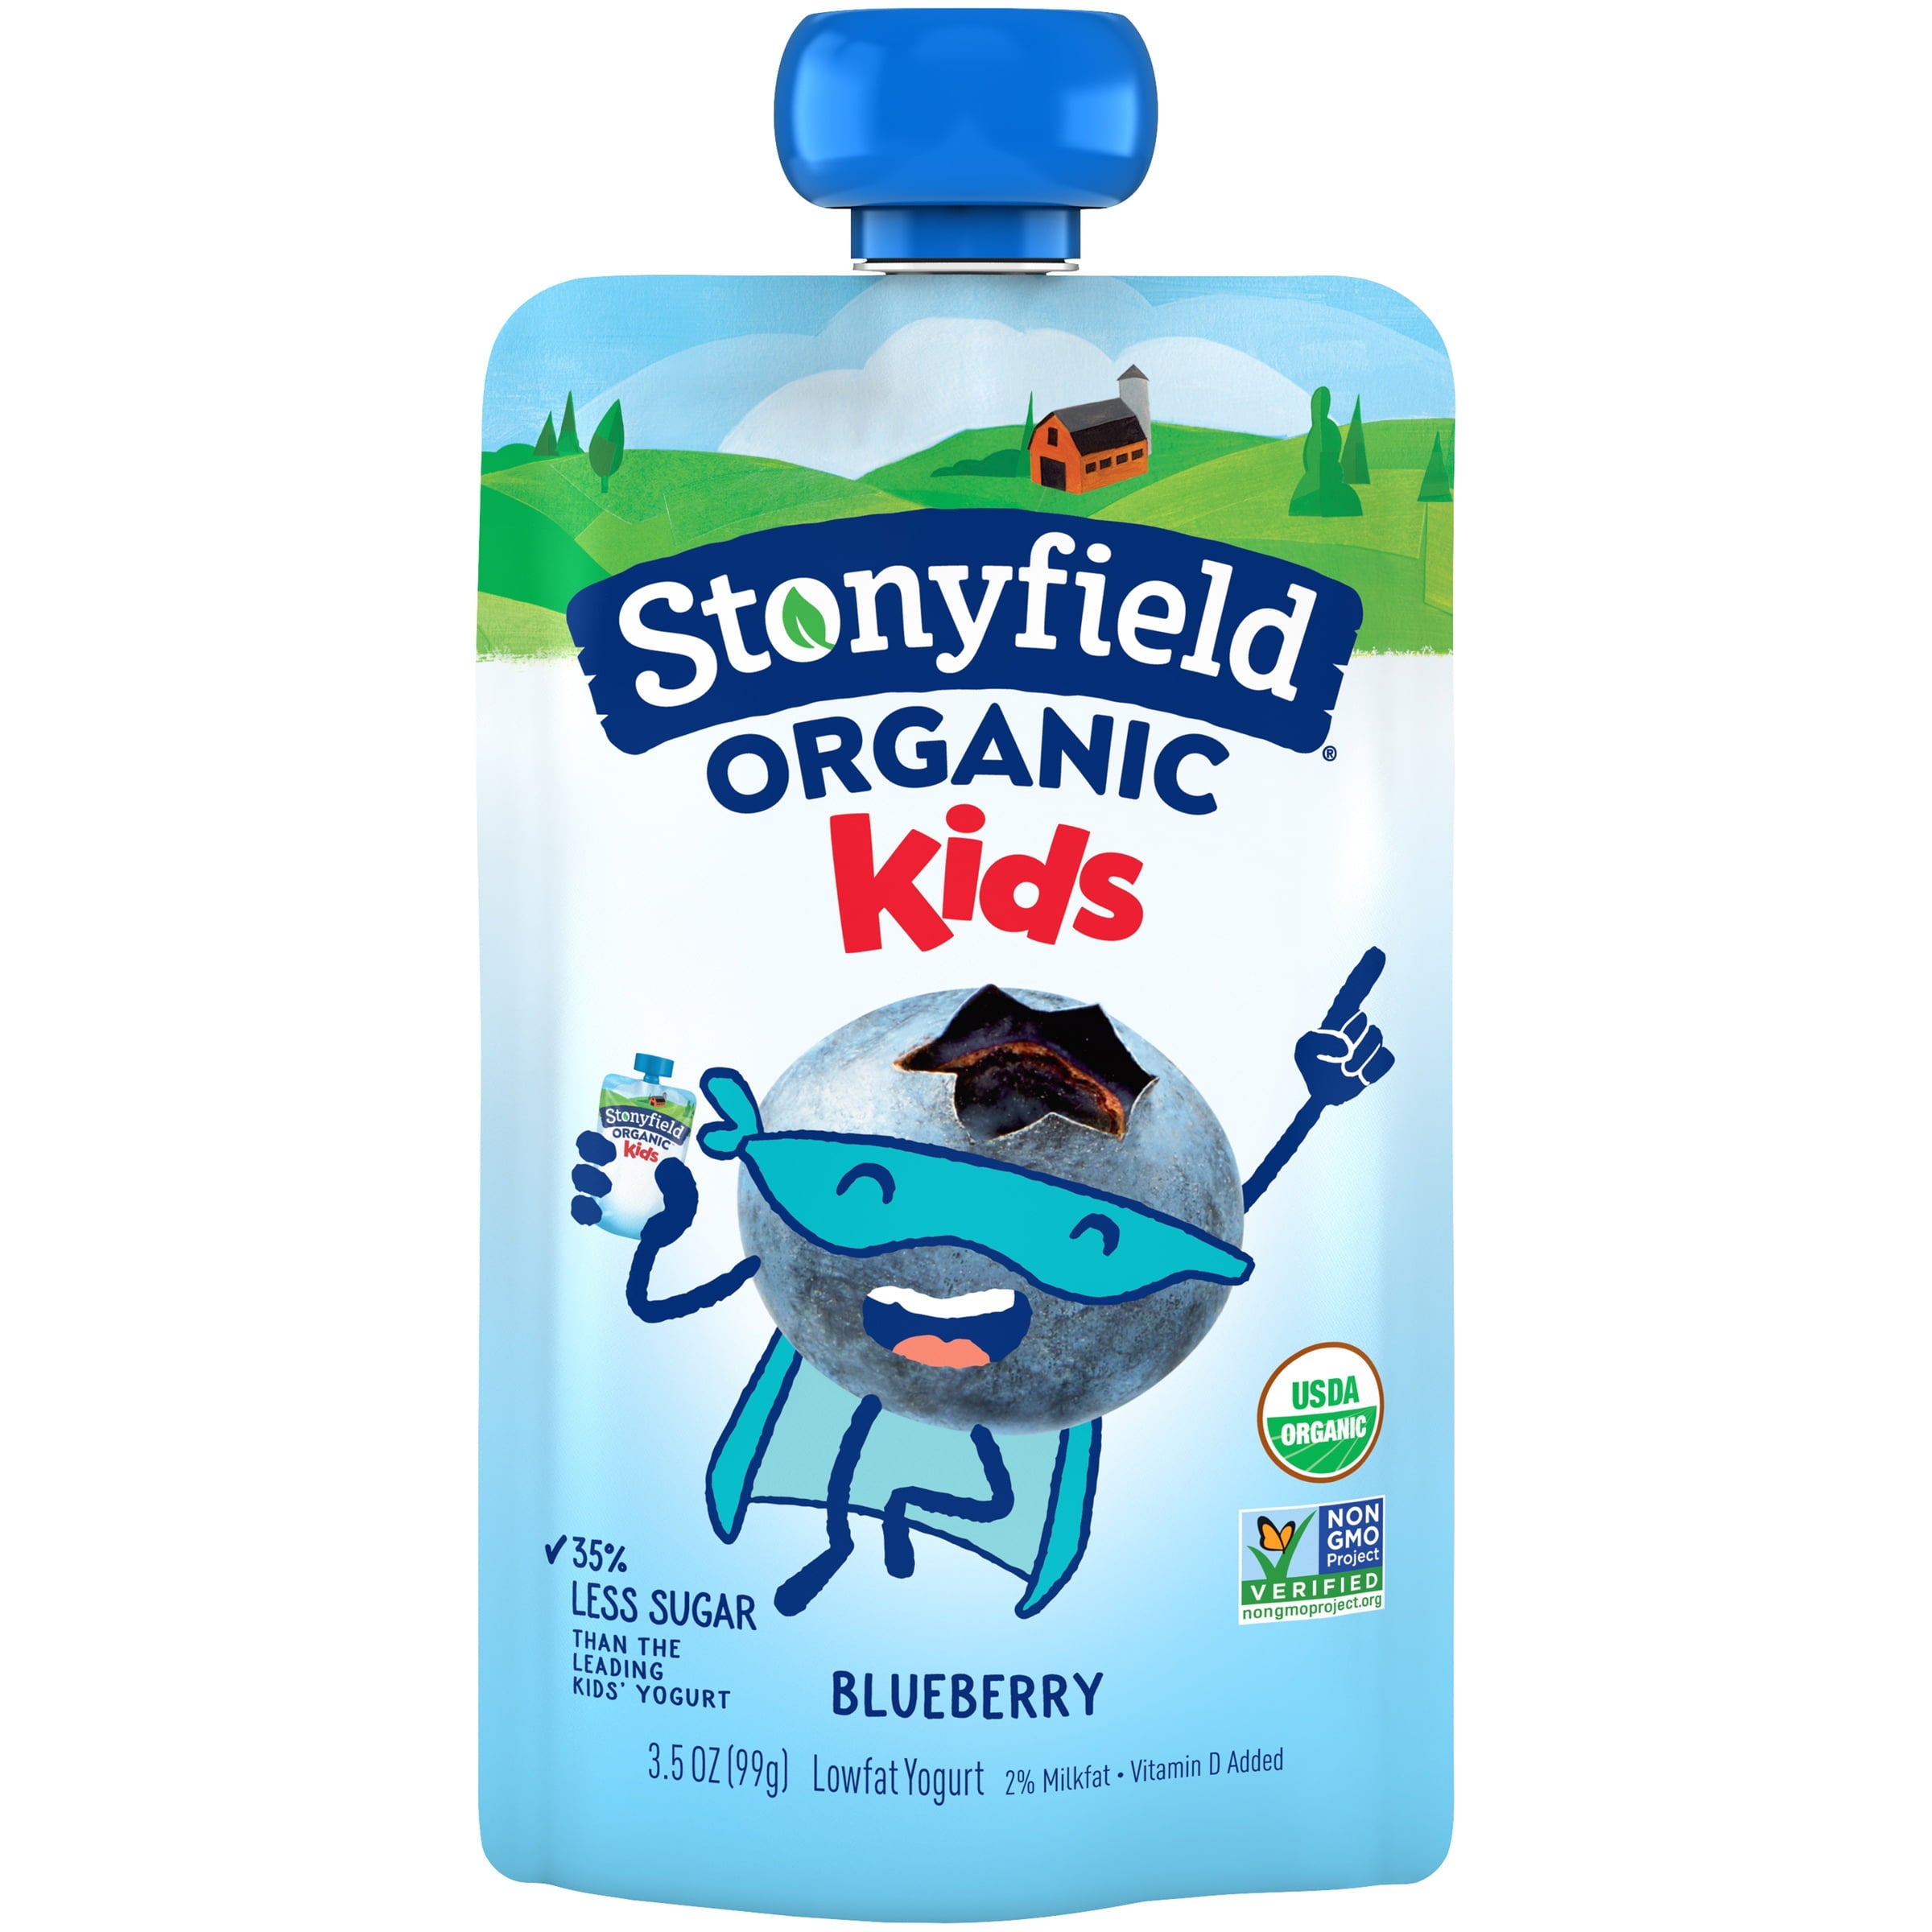 Stonyfield Organic Kids Blueberry Pouch